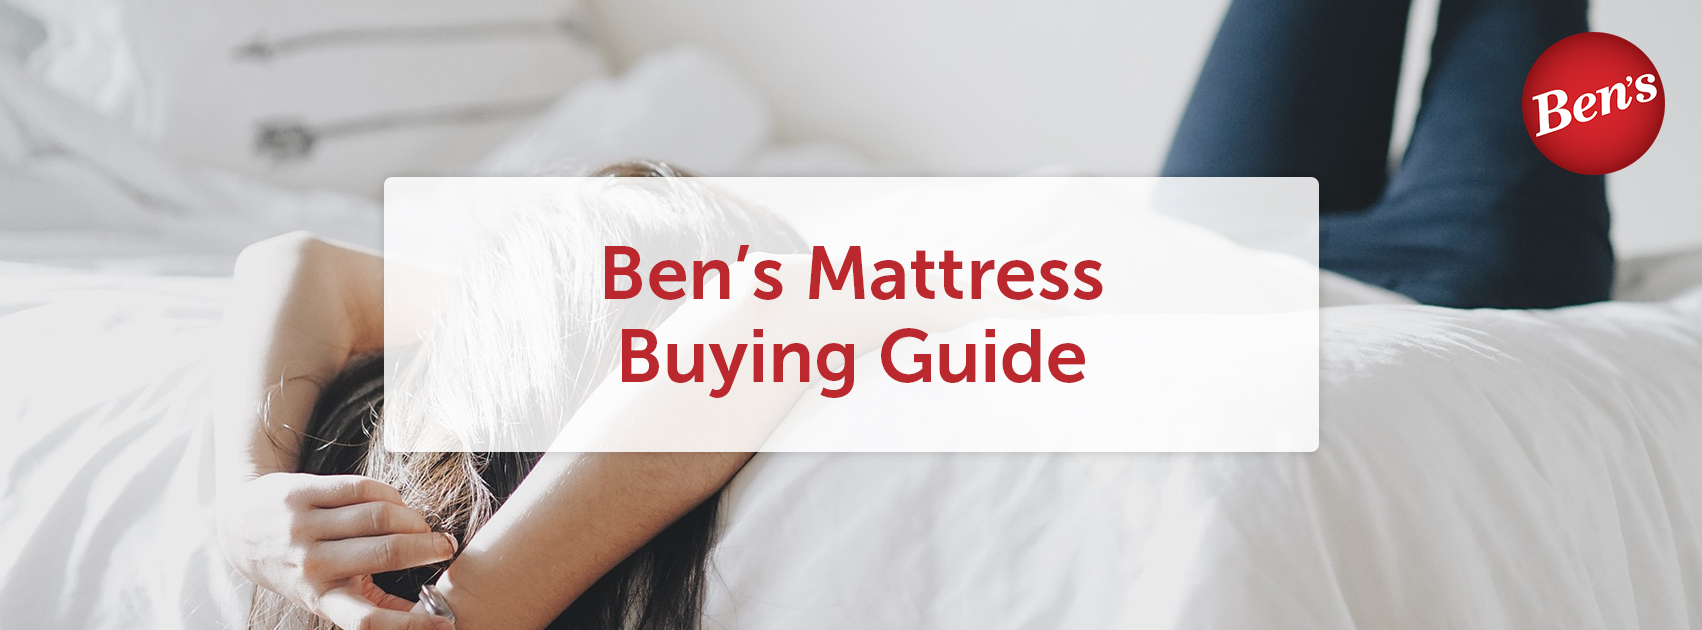 Ben’s Mattress Buying Guide